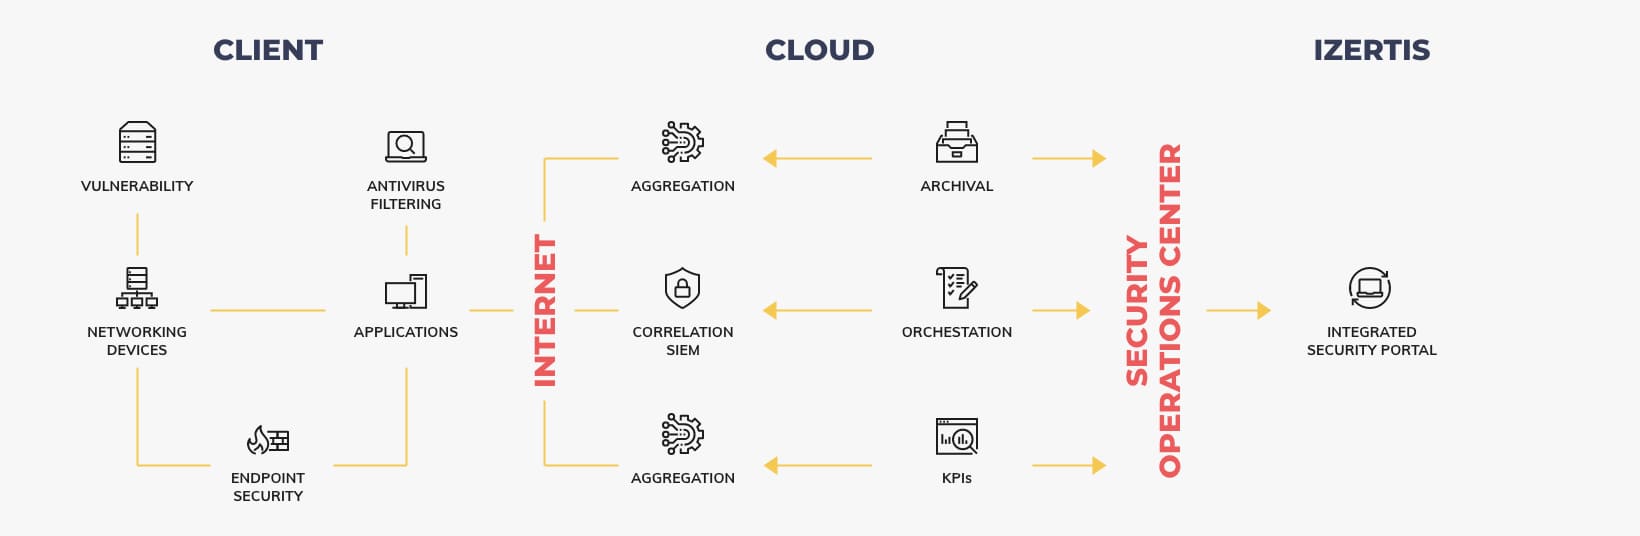 Client-Cloud-Izertis Scheme